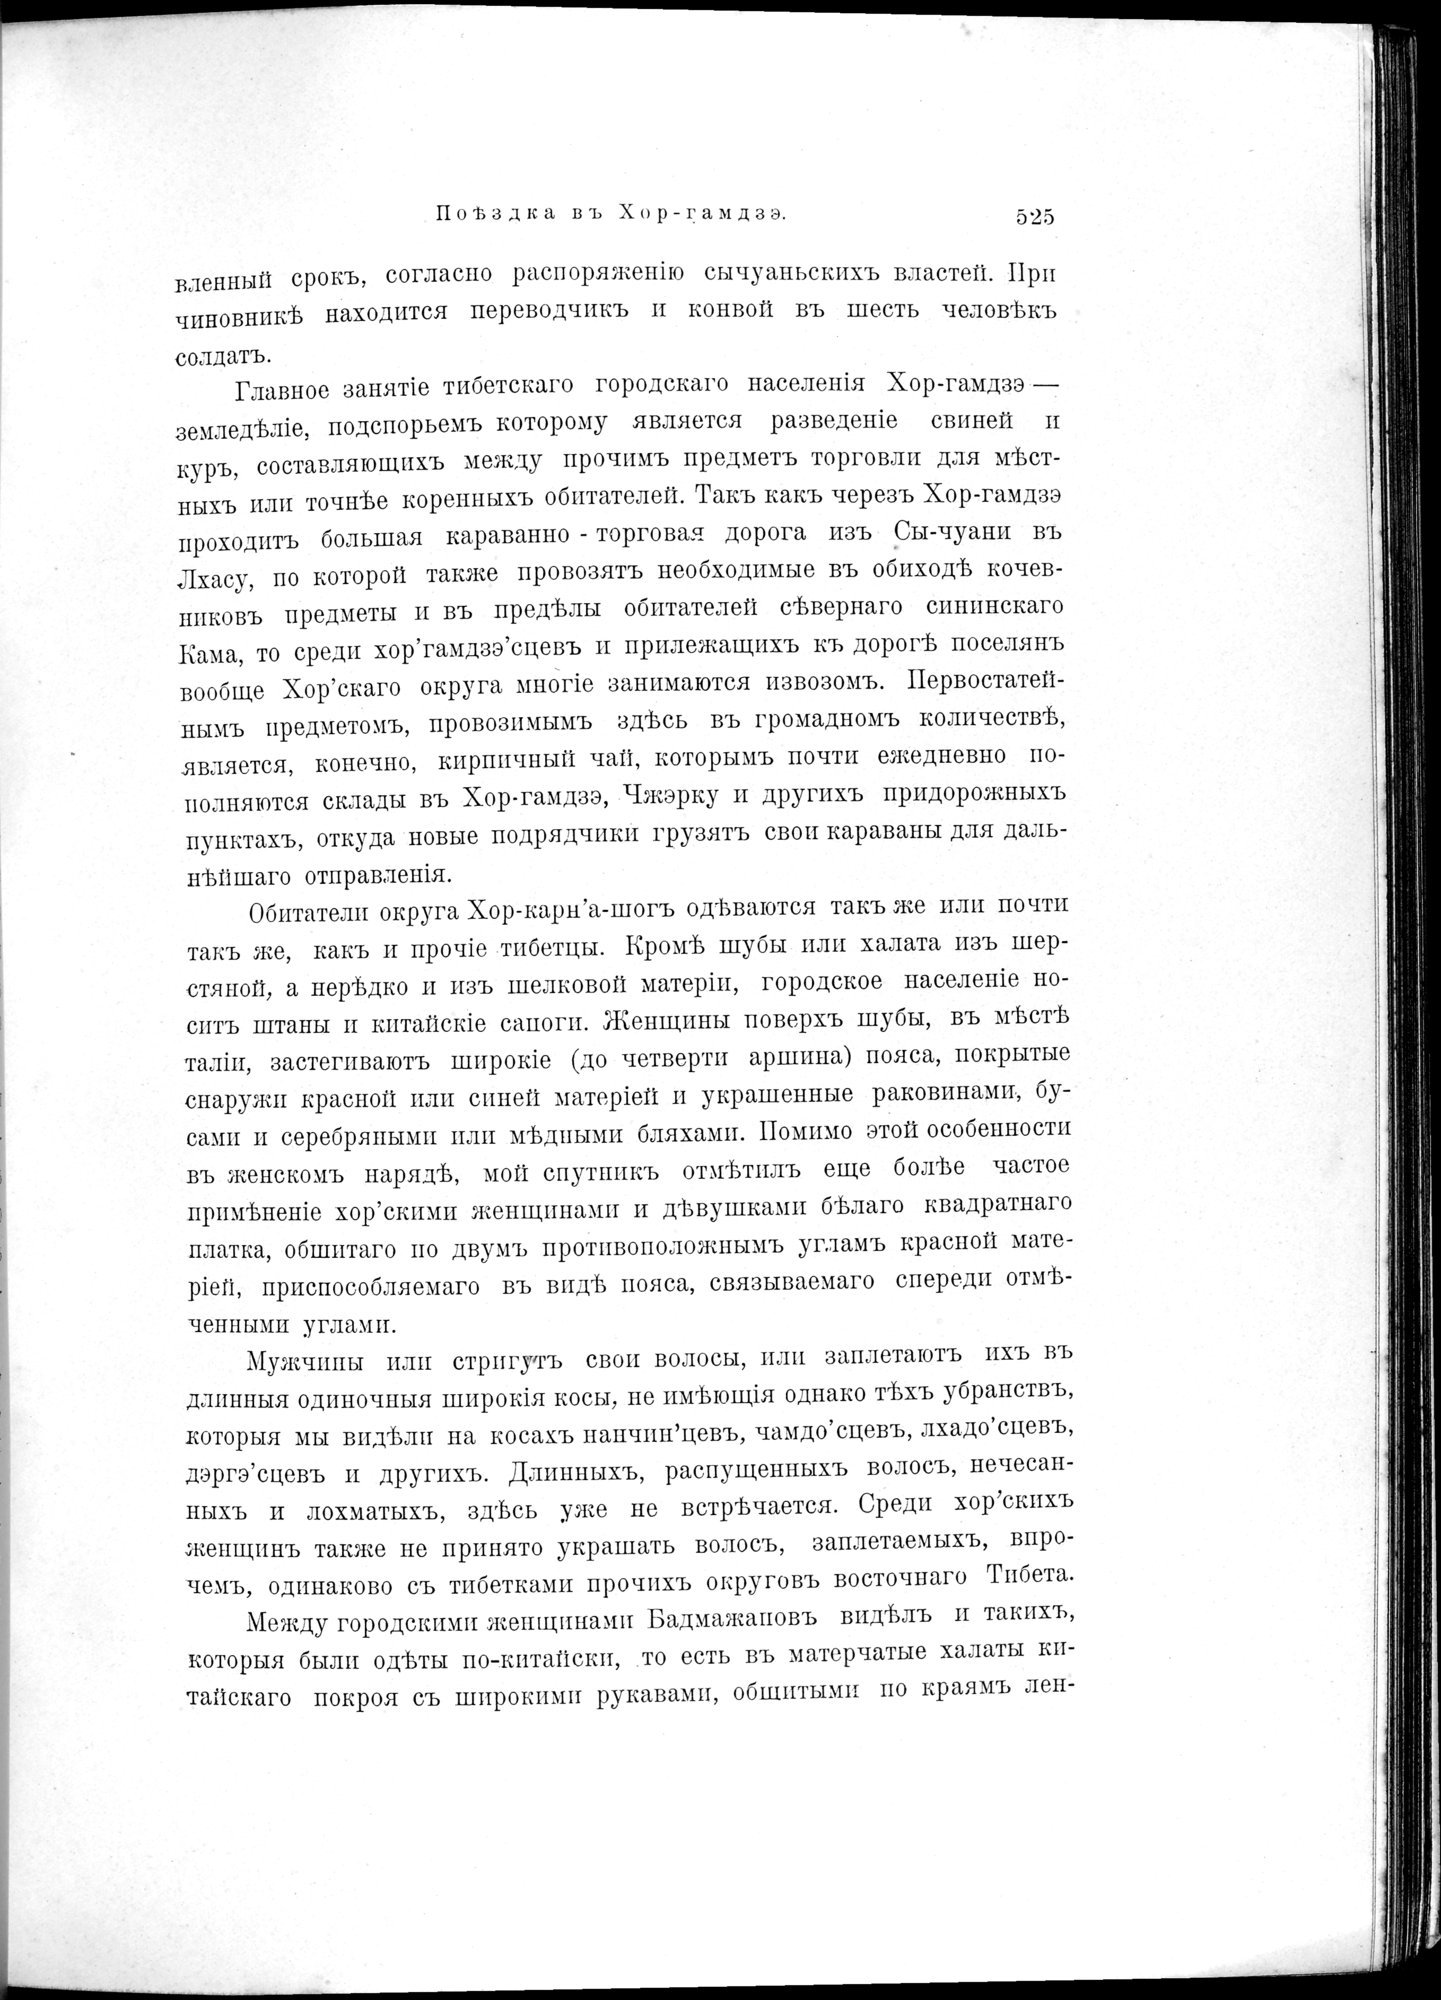 Mongoliia i Kam : vol.2 / Page 343 (Grayscale High Resolution Image)